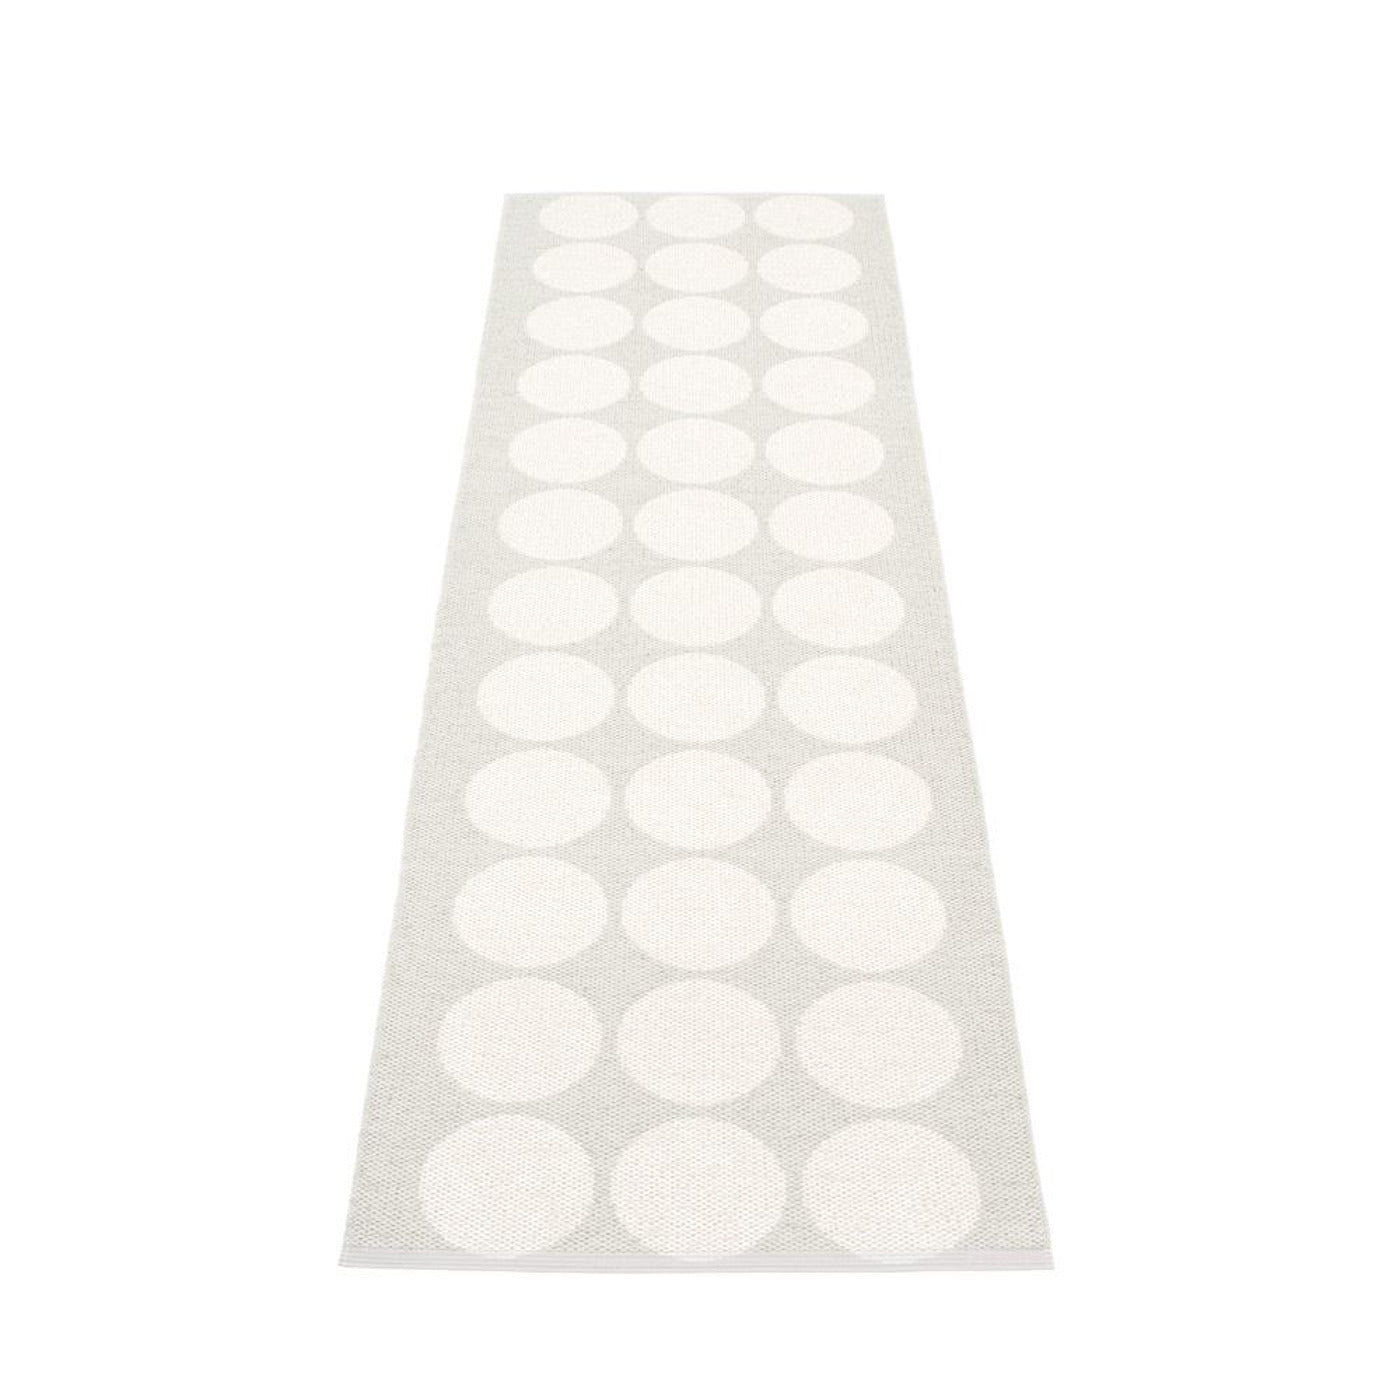 Wainscott Plastic Floor Mats Fossil Grey/White Metallic (Multiple Sizes)